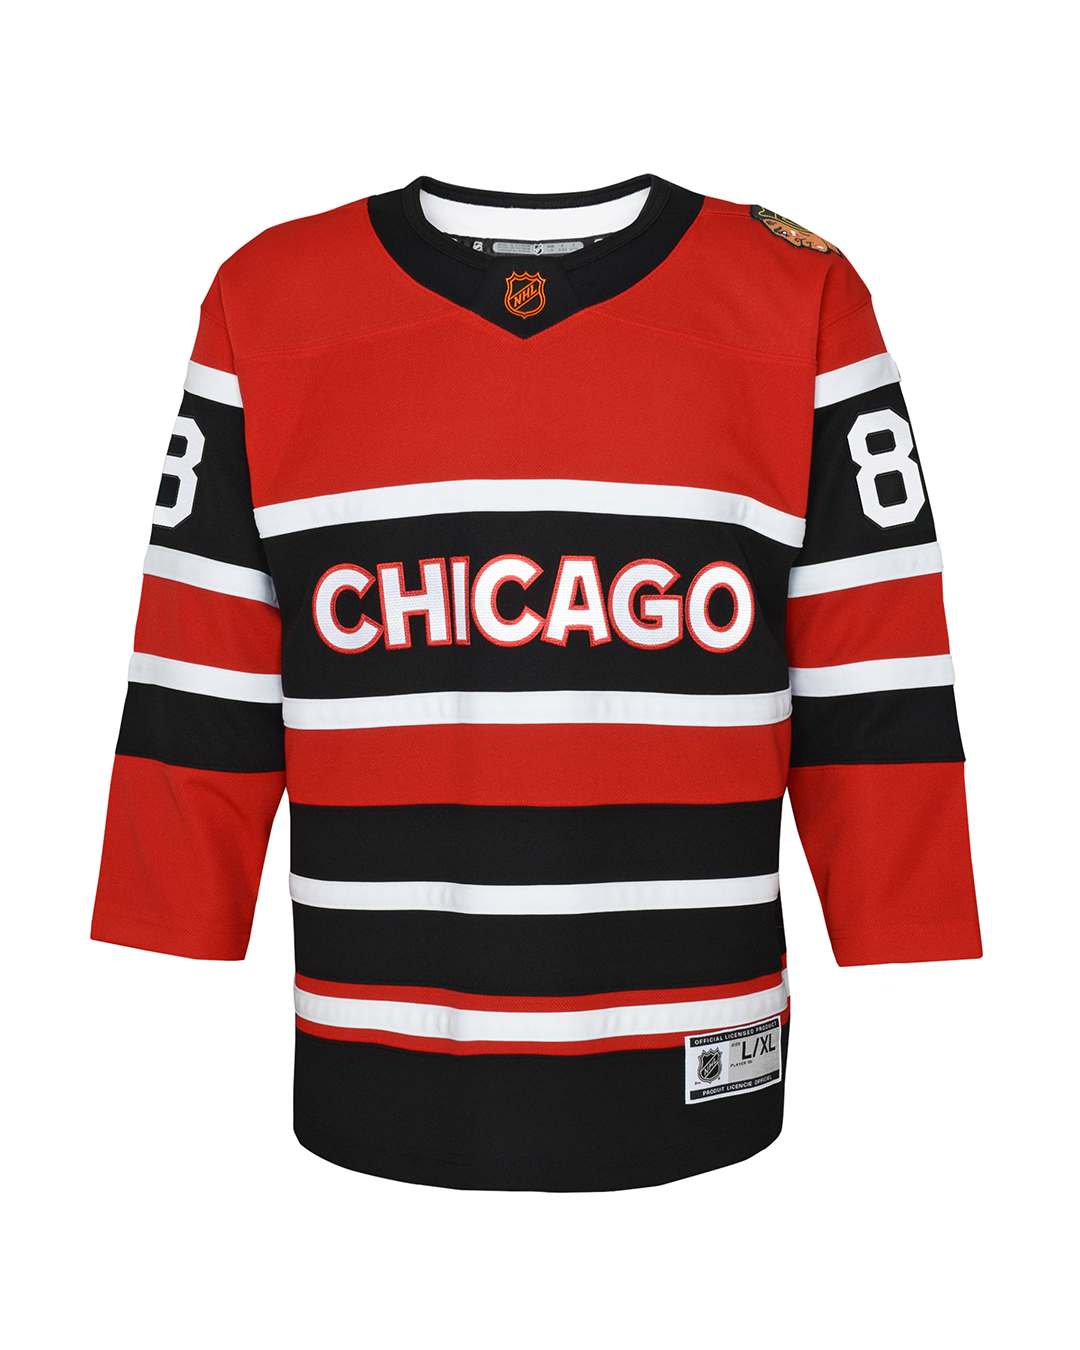 Authentic Men's Patrick Kane Black Jersey - #88 Hockey Chicago